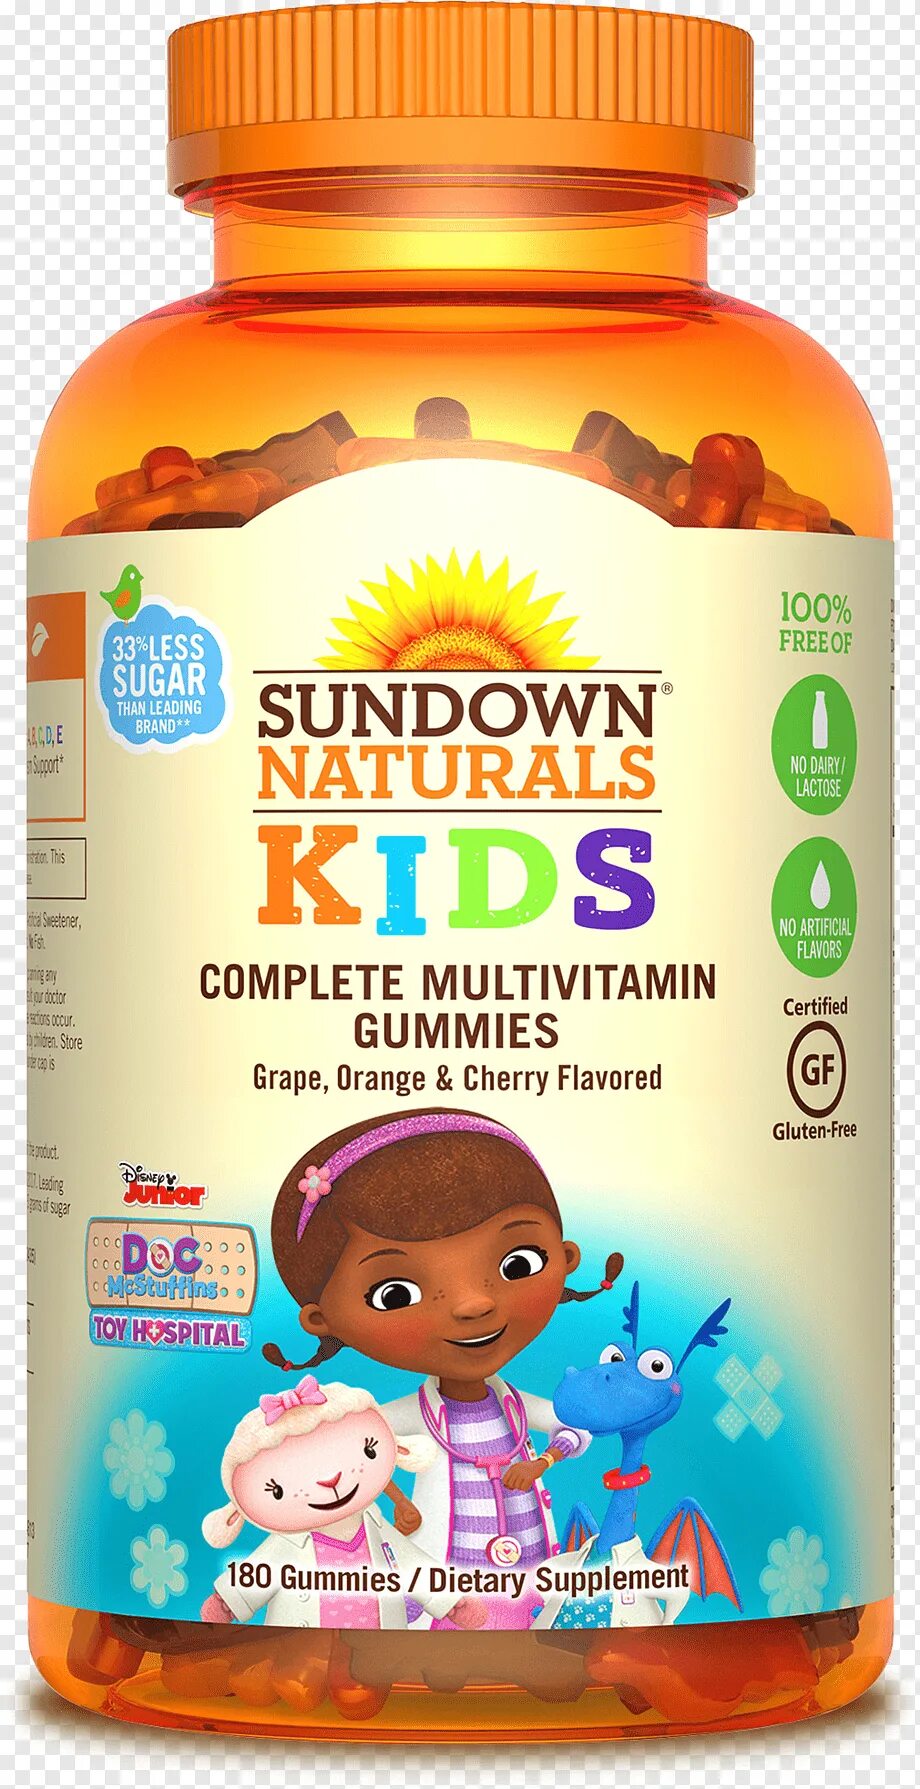 Мультивитамины для детей. Мультивитамин для детей. Витамины children's Multivitamin. Gummies мультивитамин витамины для детей. Киндер мультивитамины